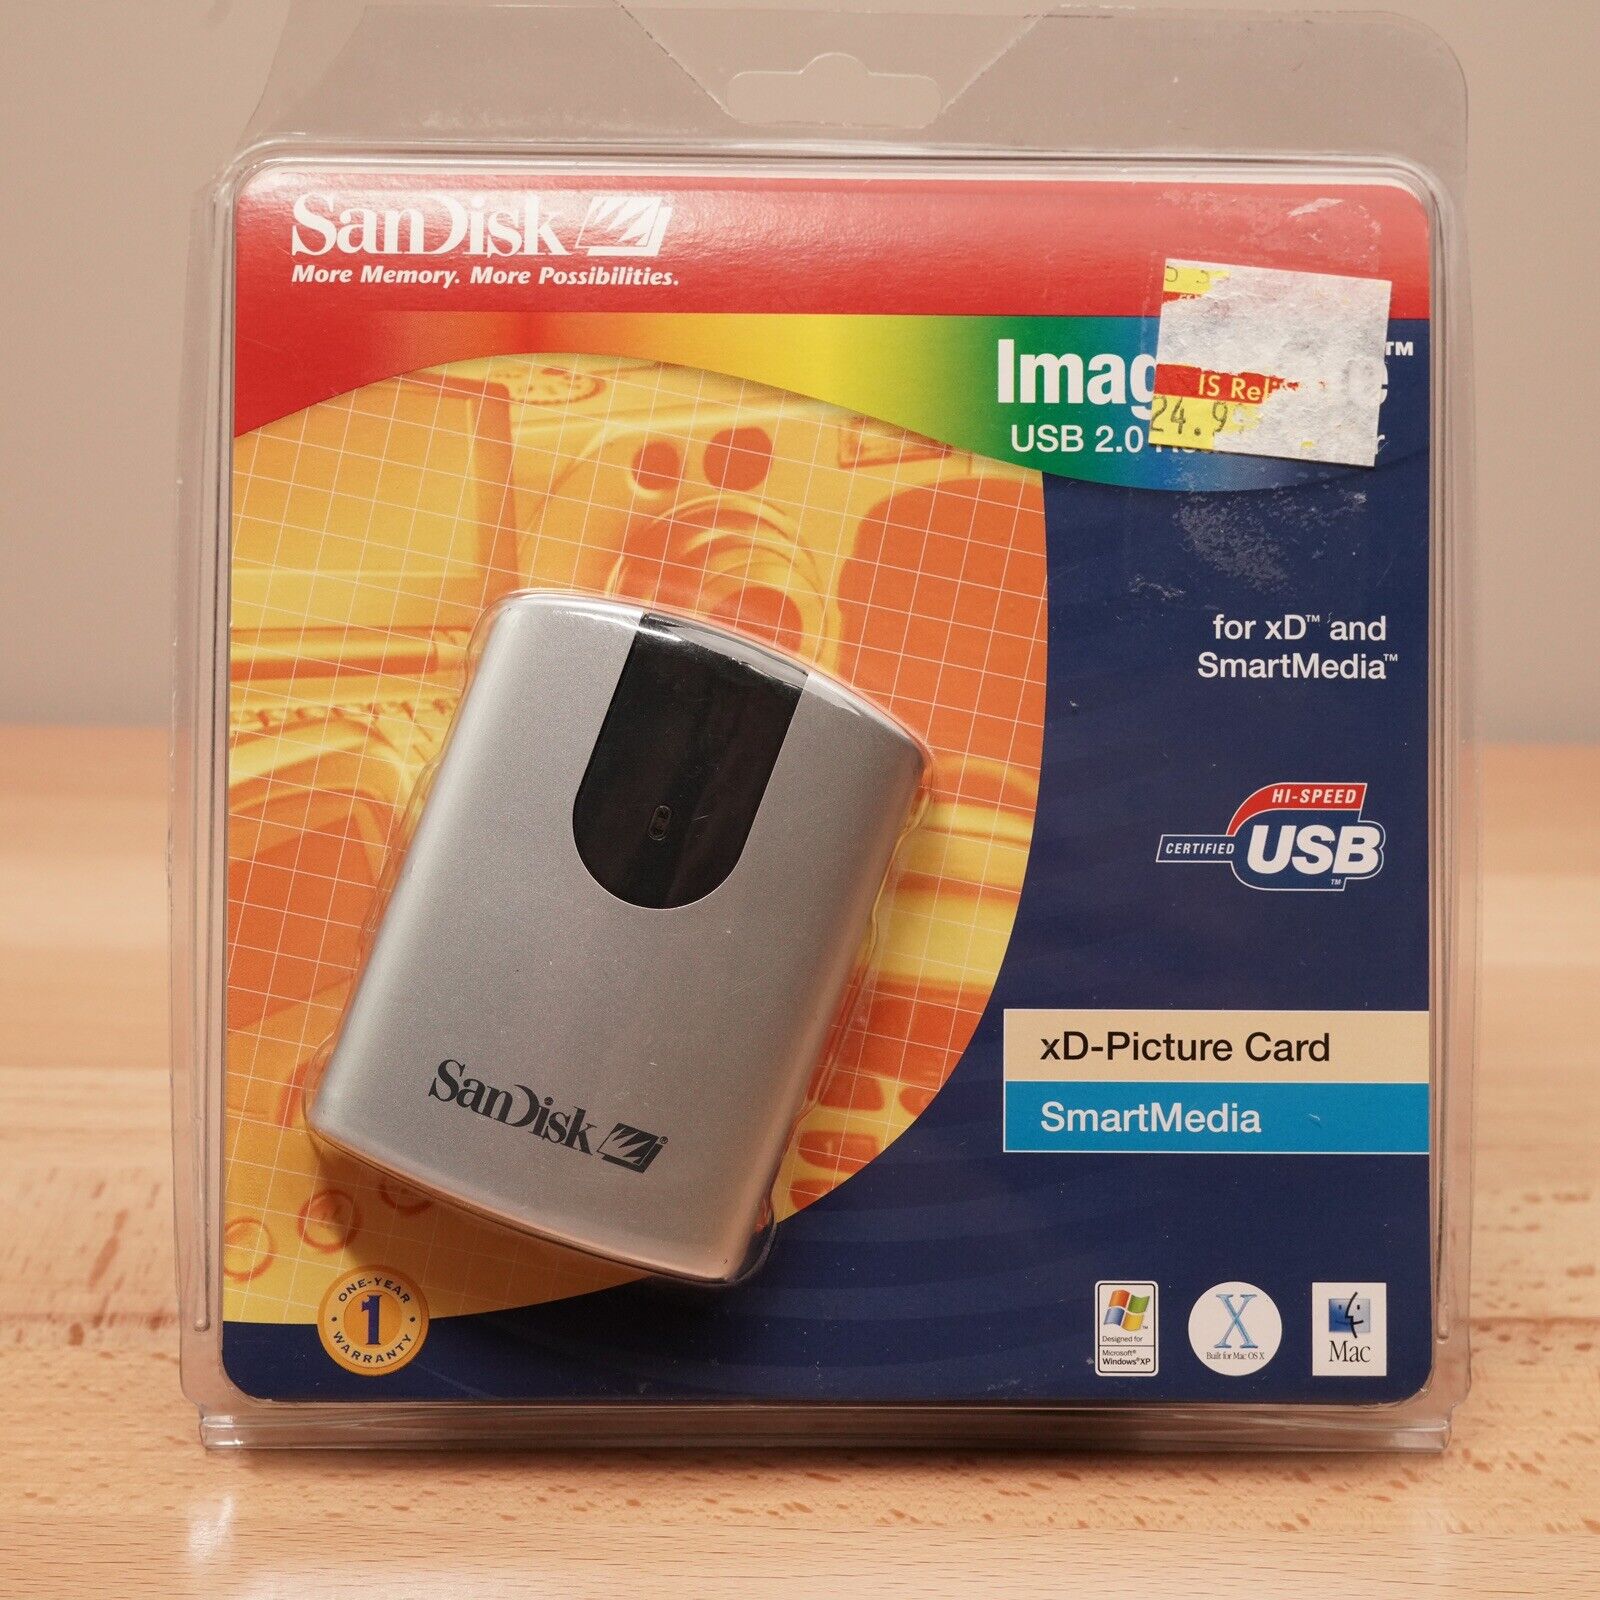 Sandisk Image Mate USB 2.0  Reader/Writer SDDR-93-07 Sealed New In Box